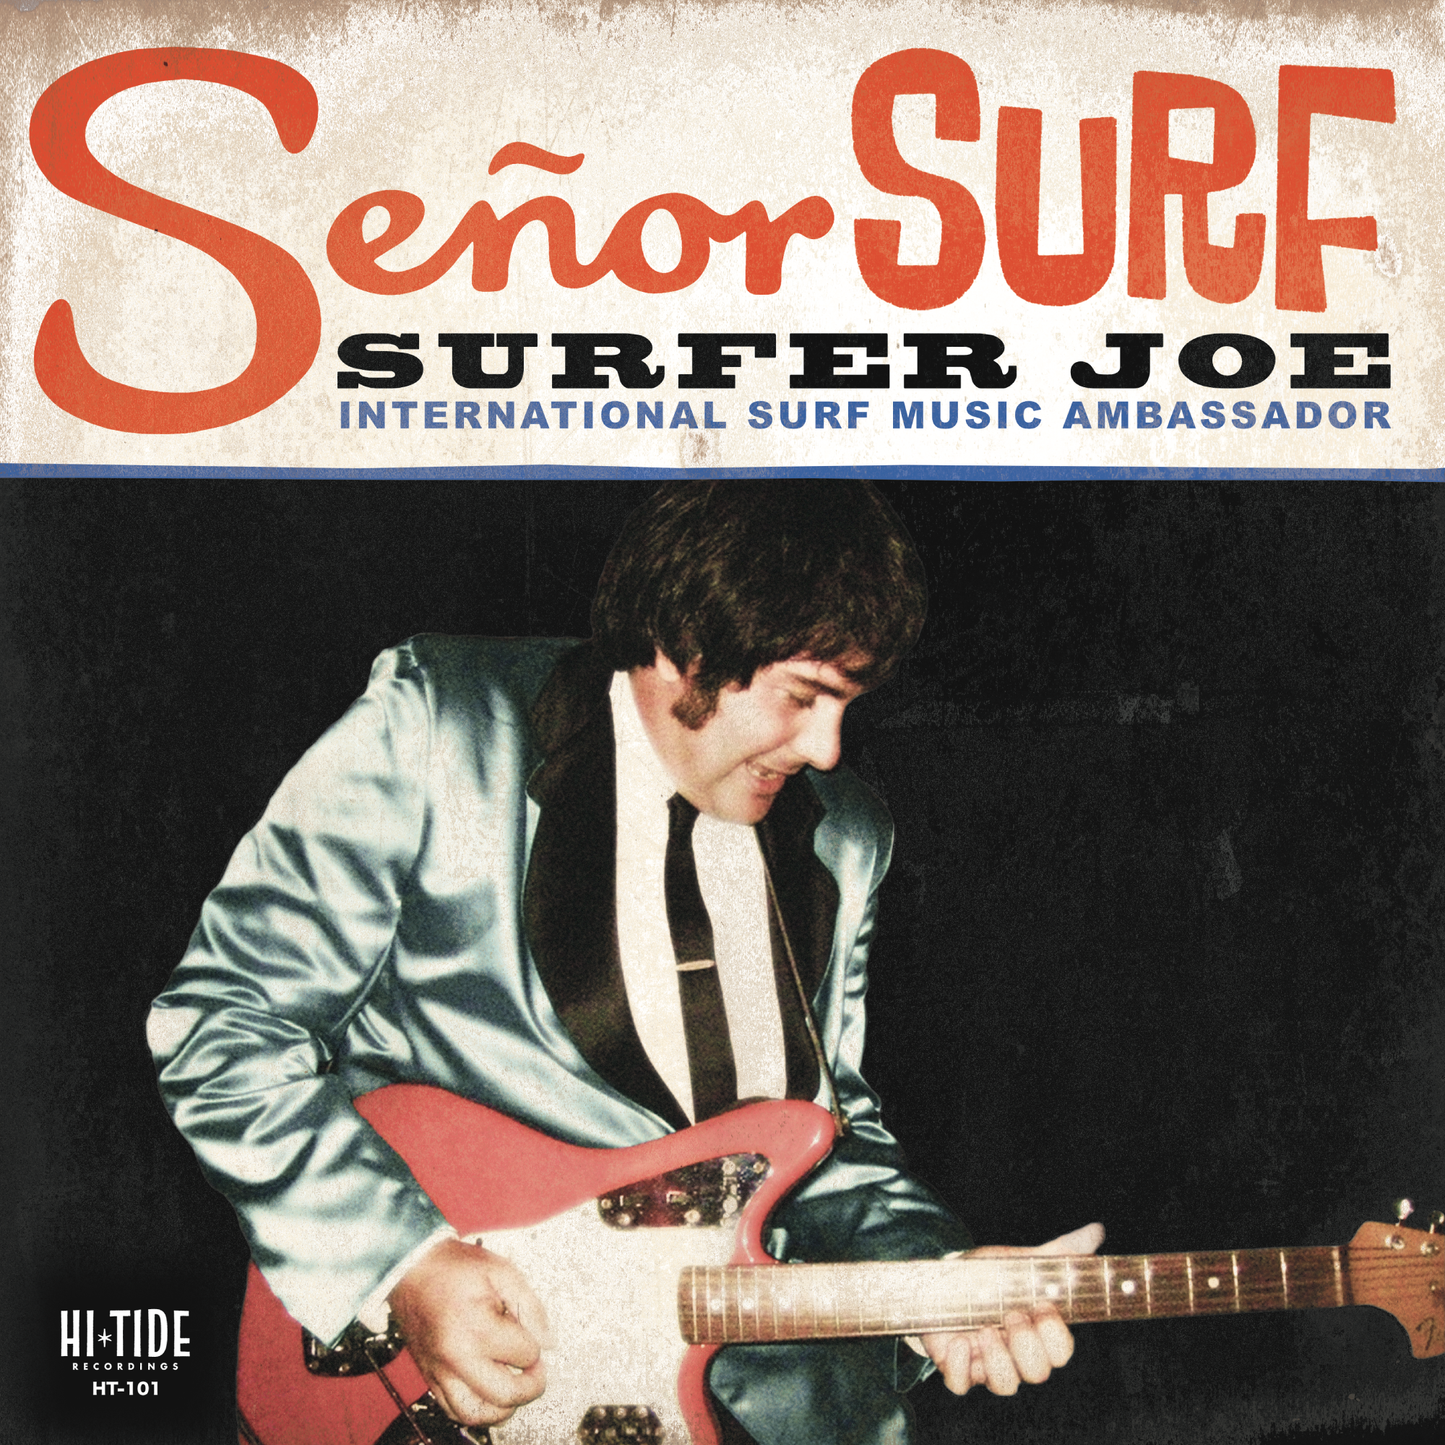 Surfer Joe "Señor Surf" LP